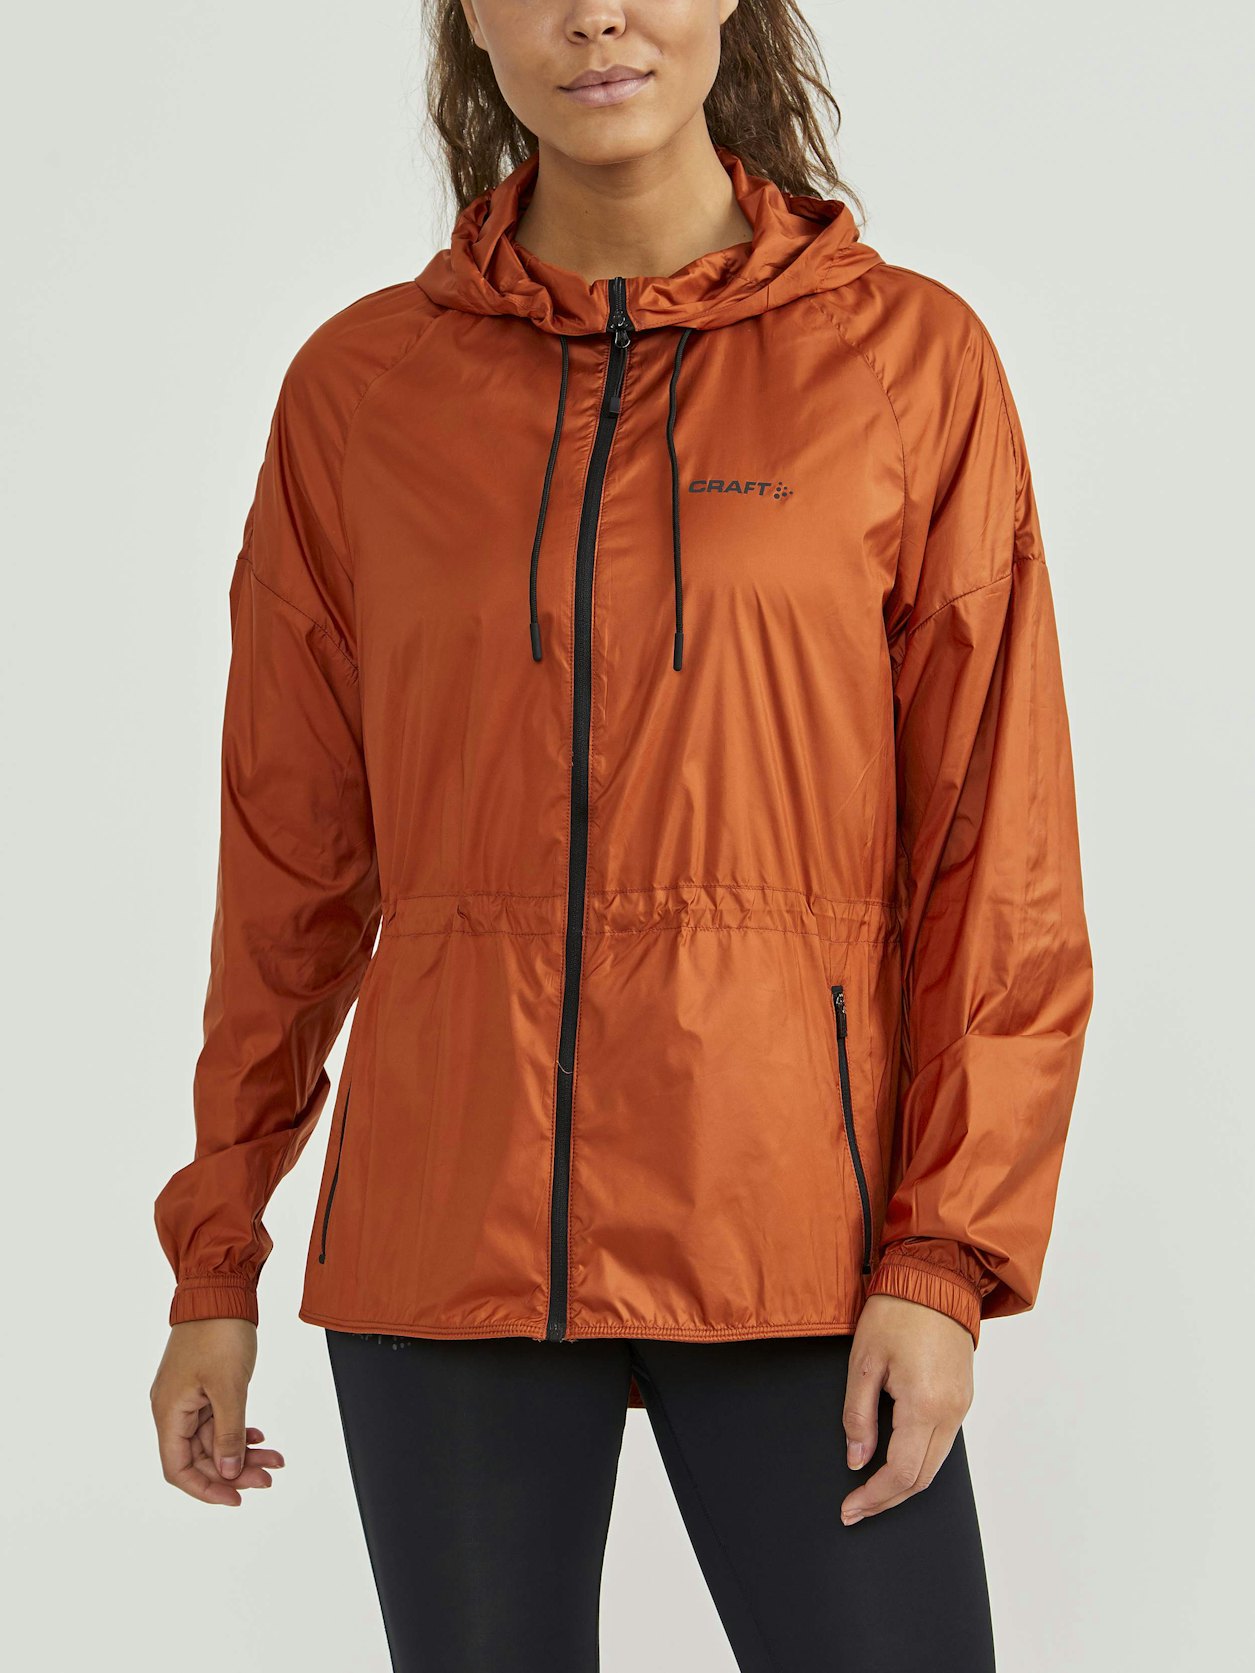 ADV Wind Jacket W - Orange Craft Sportswear